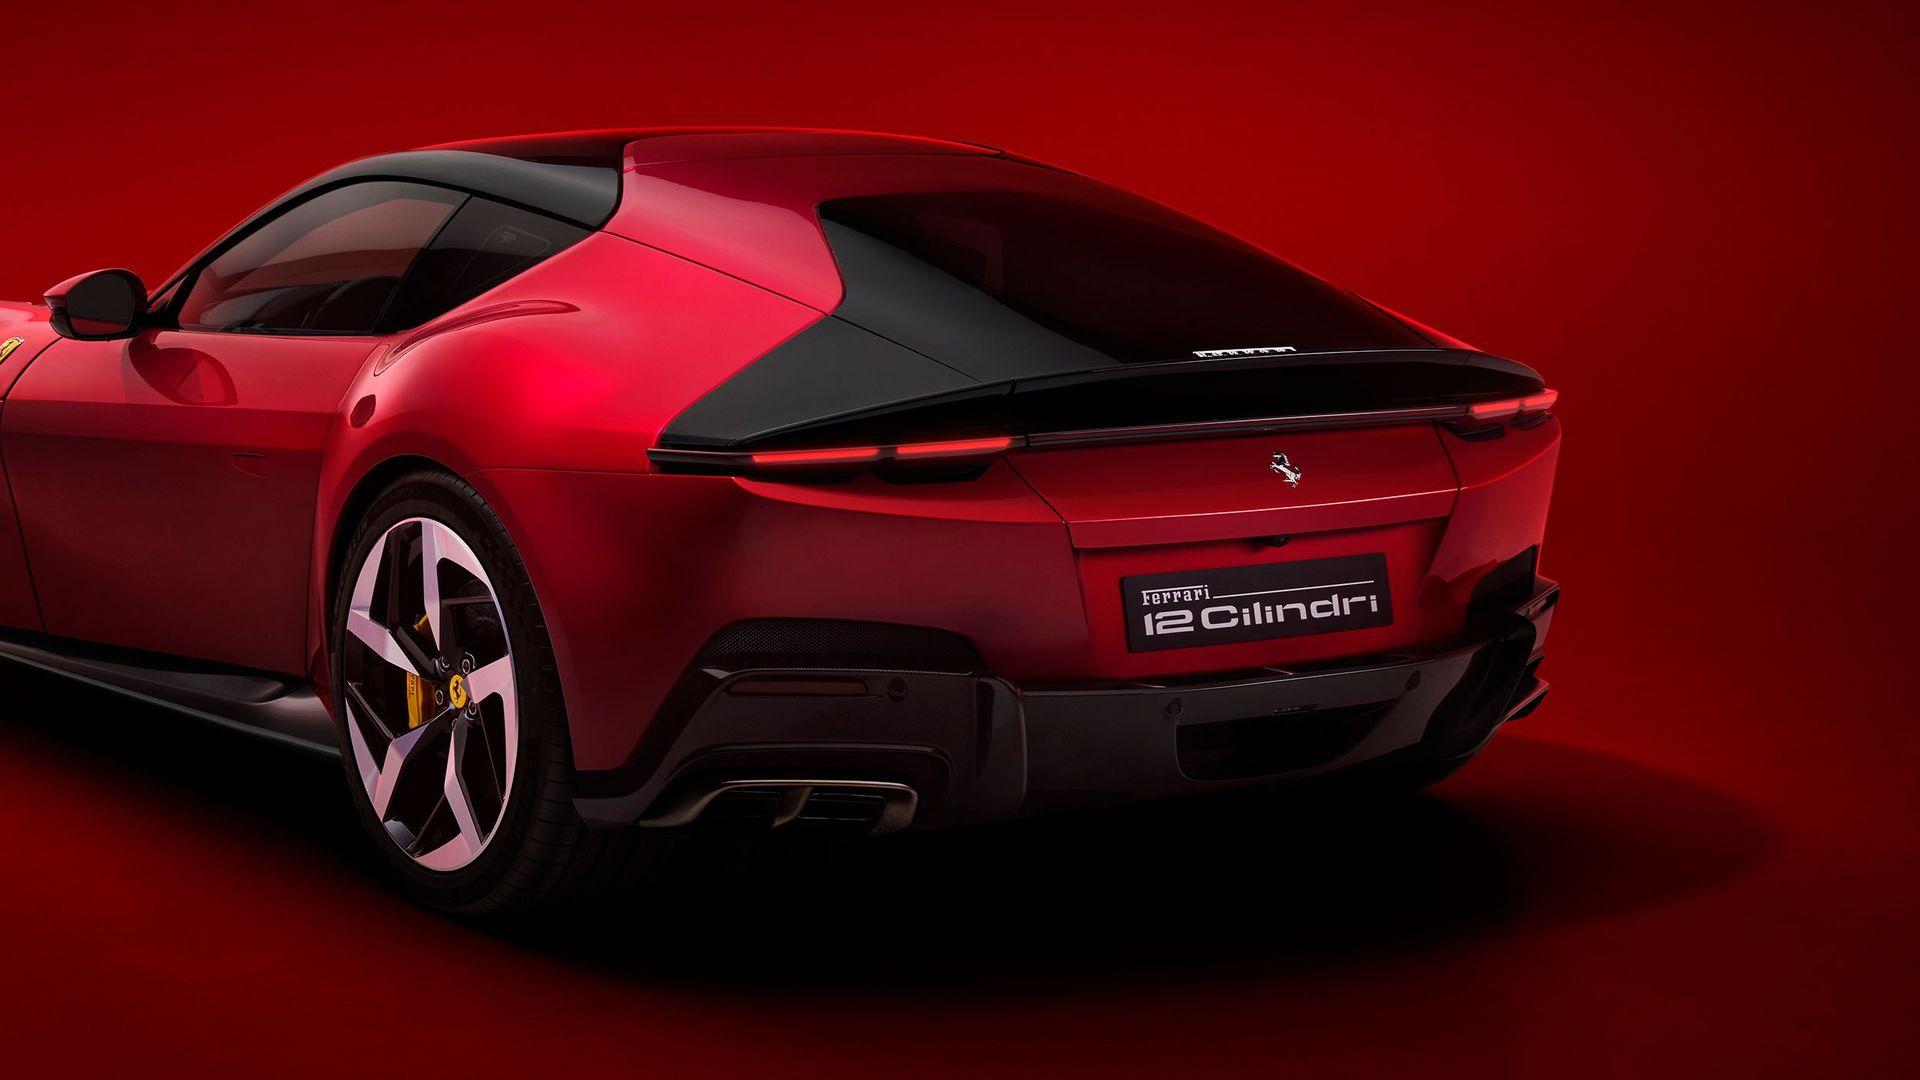 Ferrari-12cilindri-detail.jpg